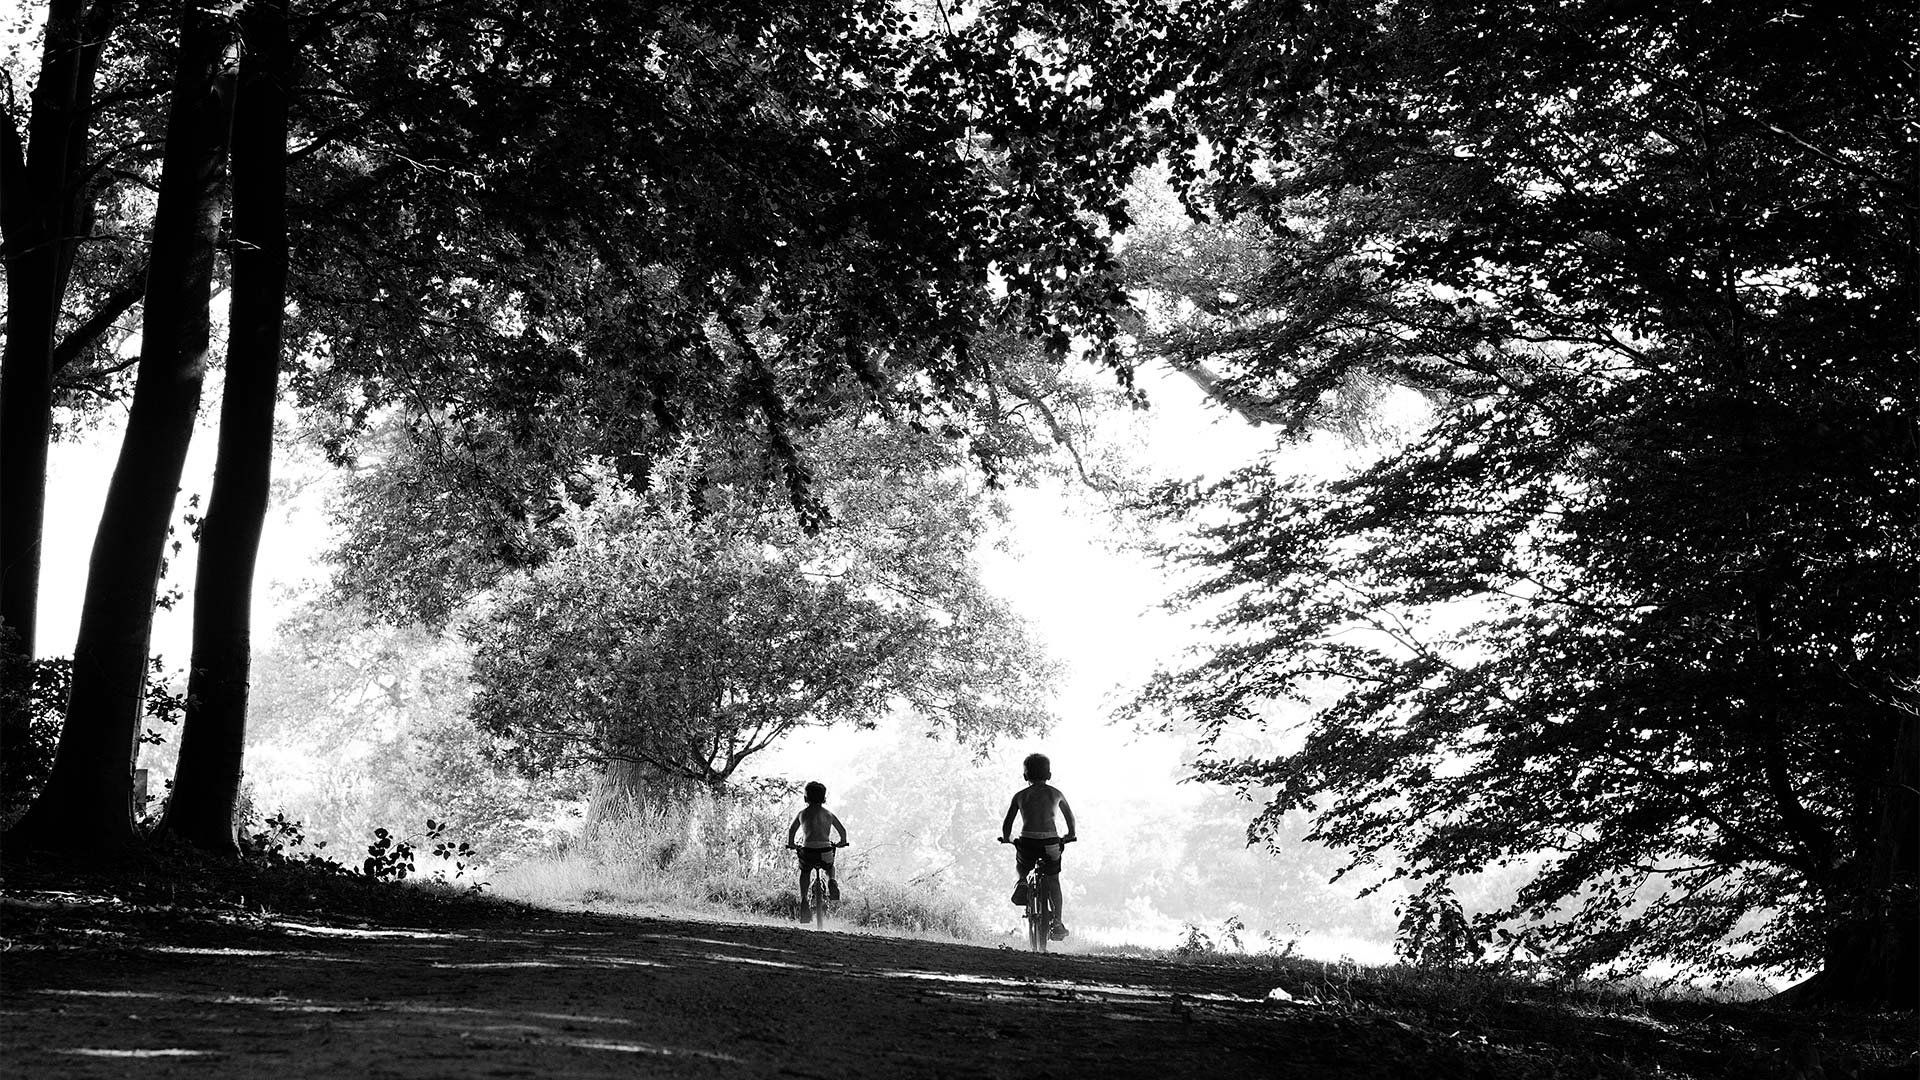 Children ride bikes through trees.